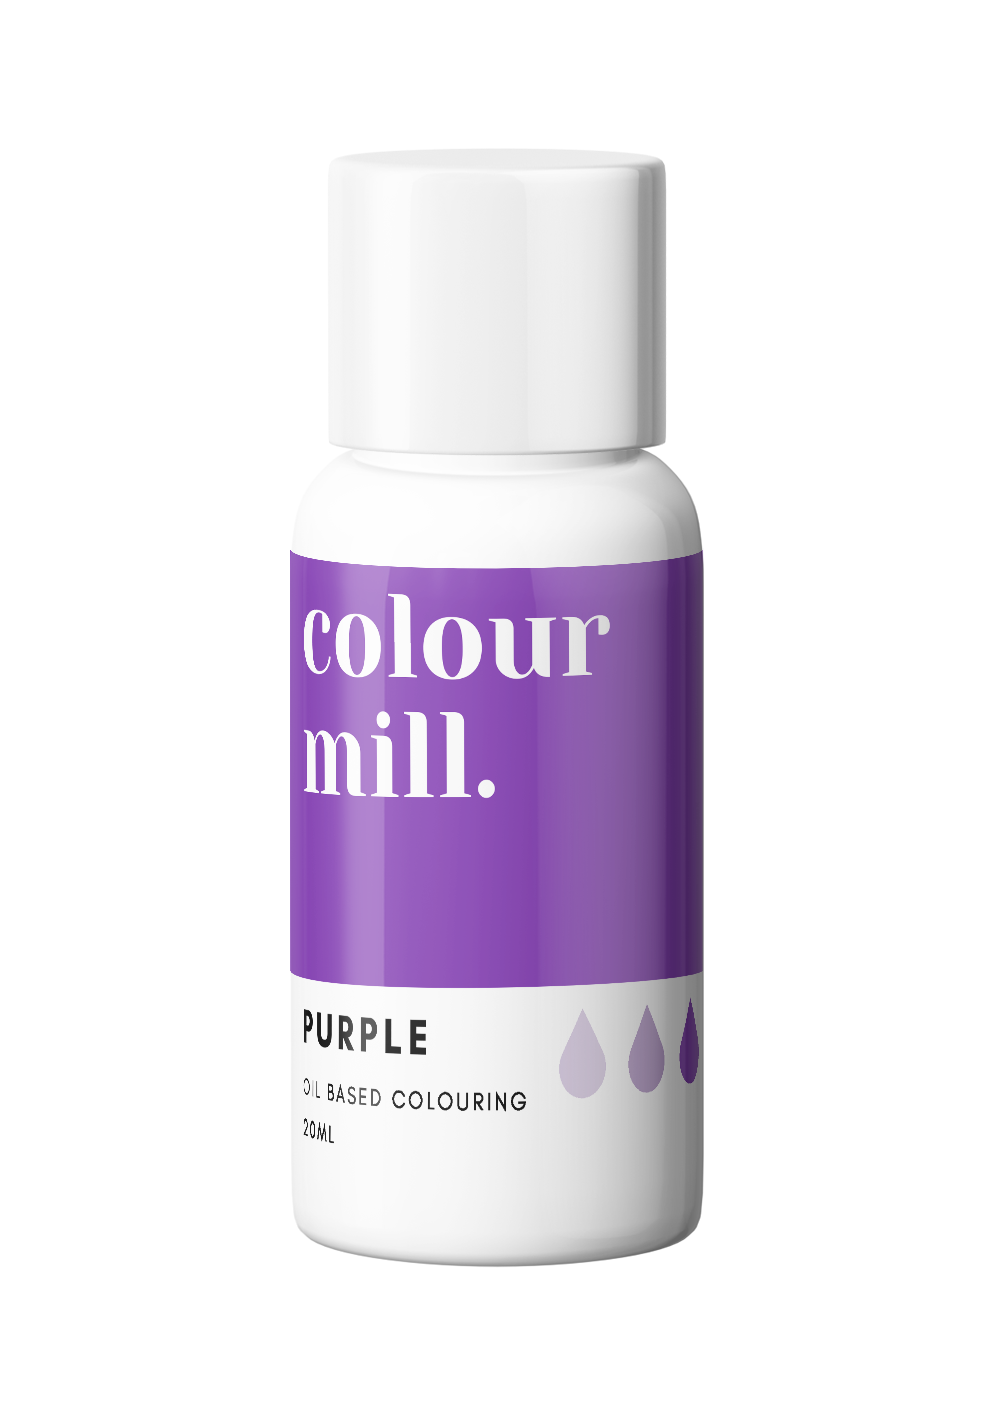 PURPLE - 20ml Colour Mill